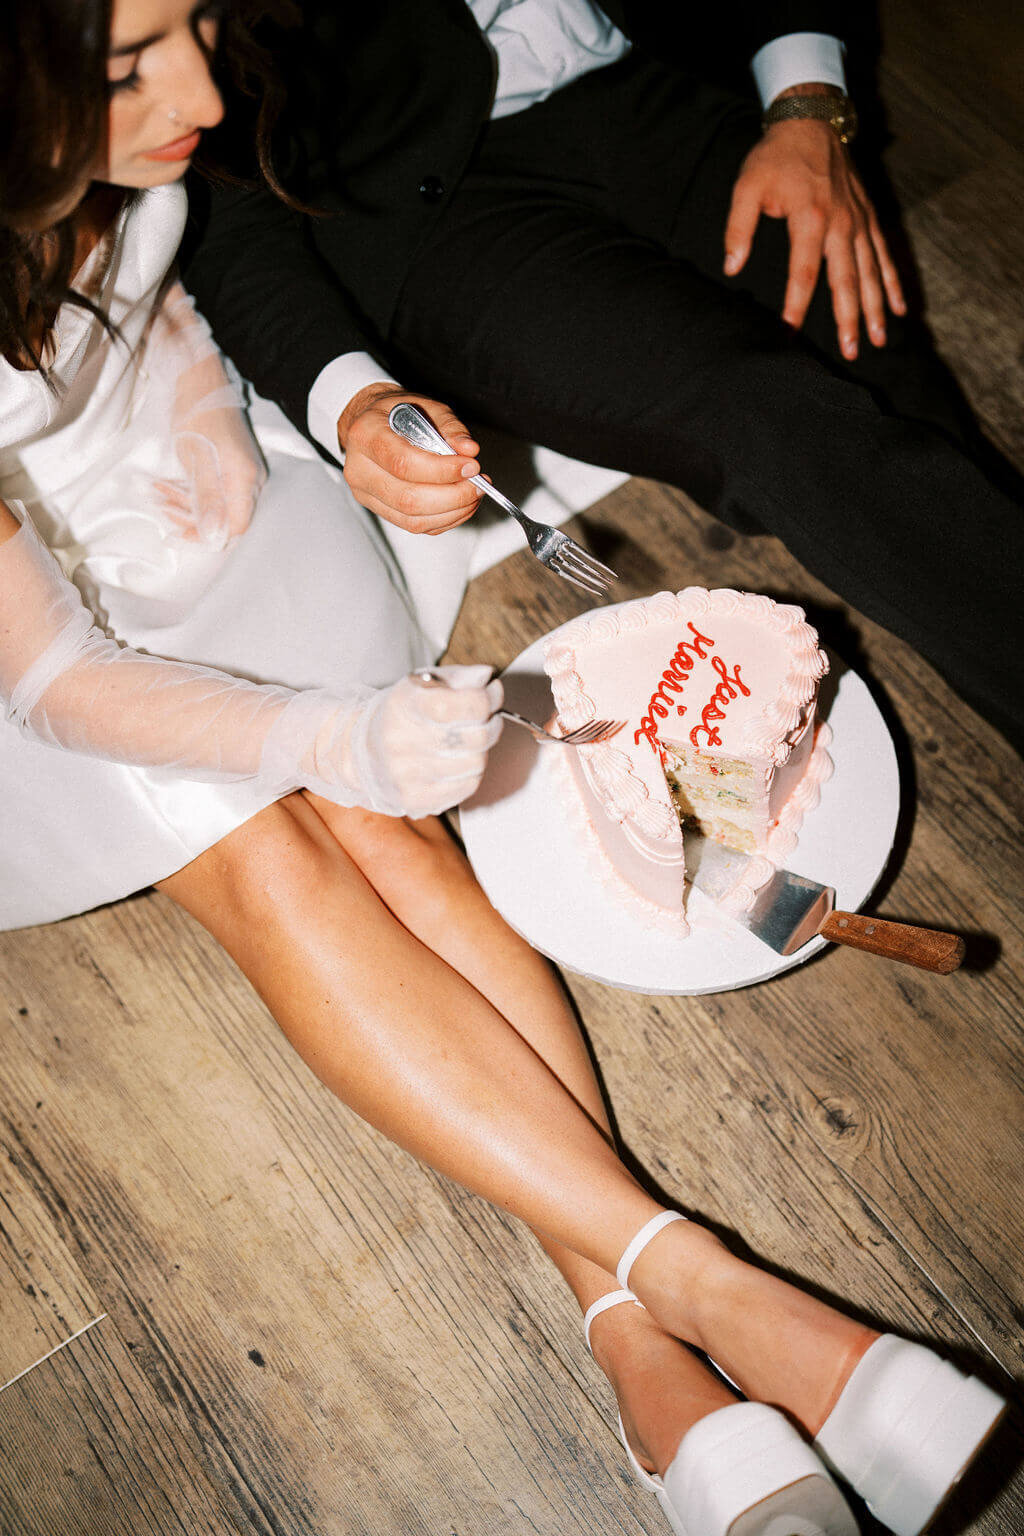 Bride eating her wedding cake on the floor